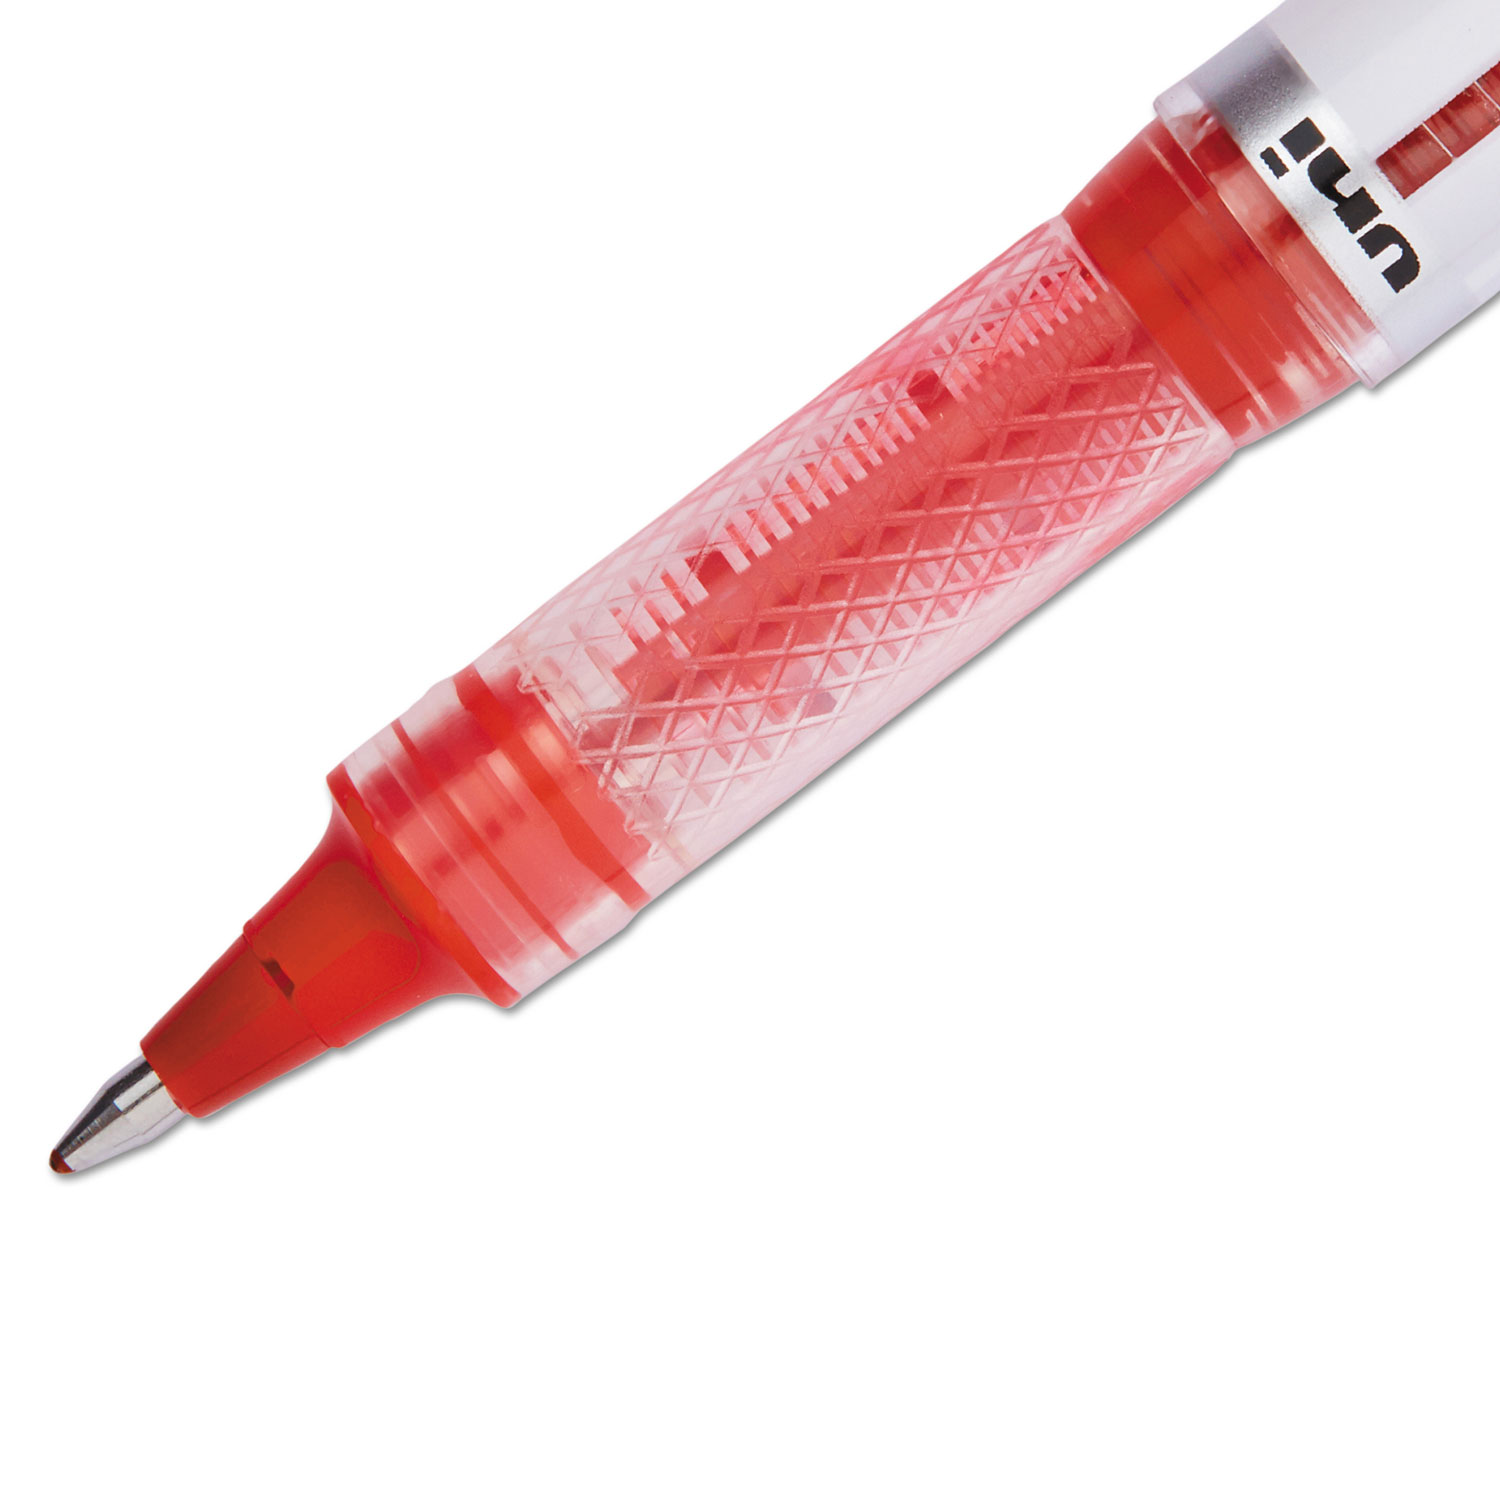 VISION ELITE Roller Ball Stick Waterproof Pen, Red Ink, Bold